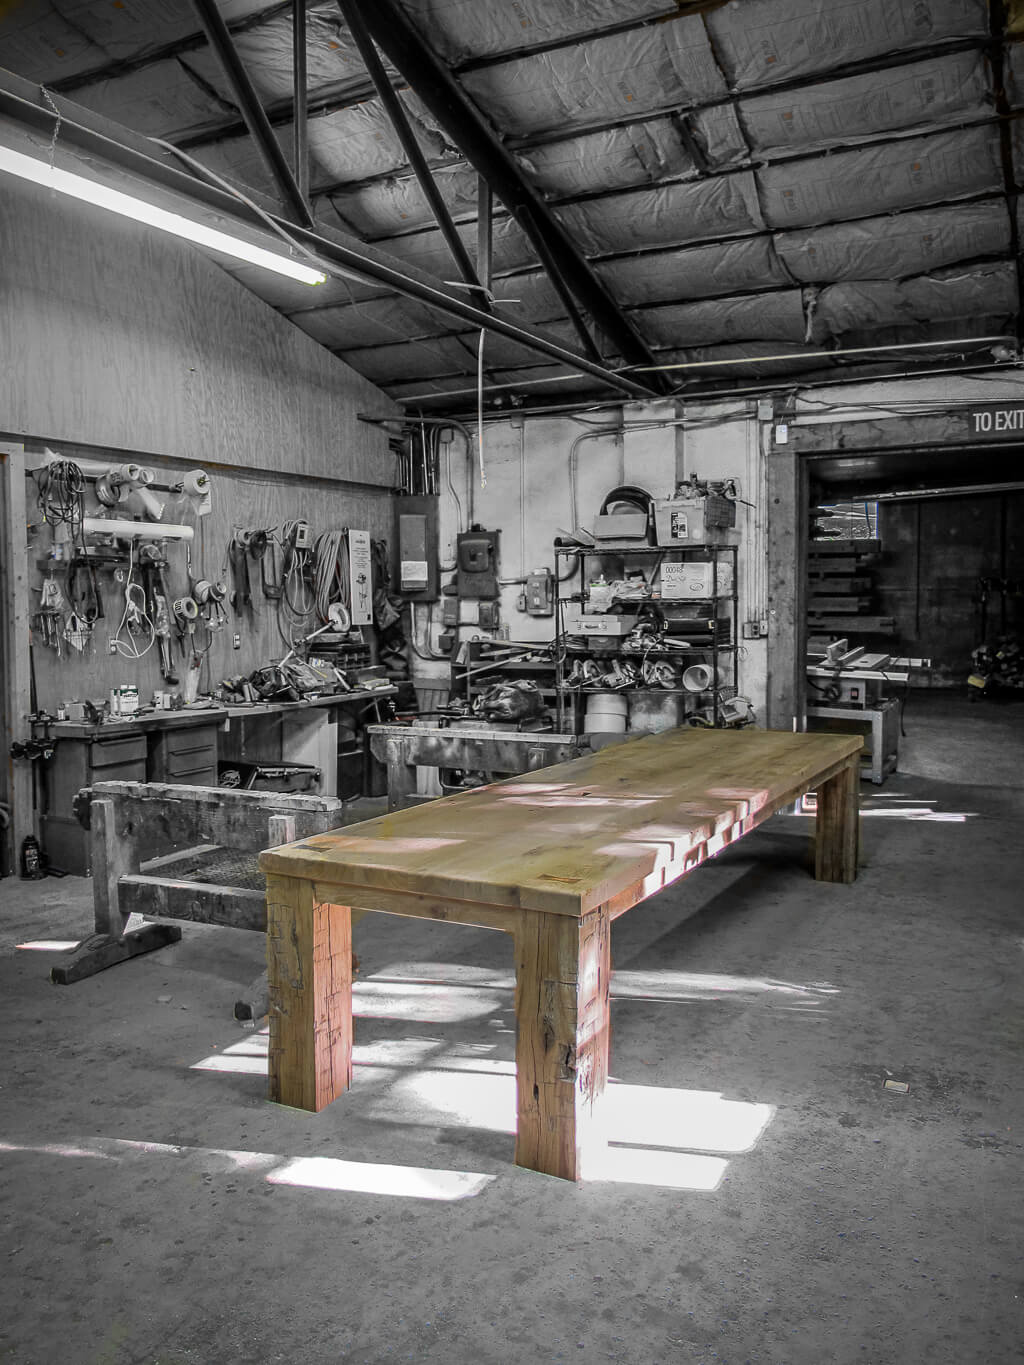 Custom Timber Dining Table